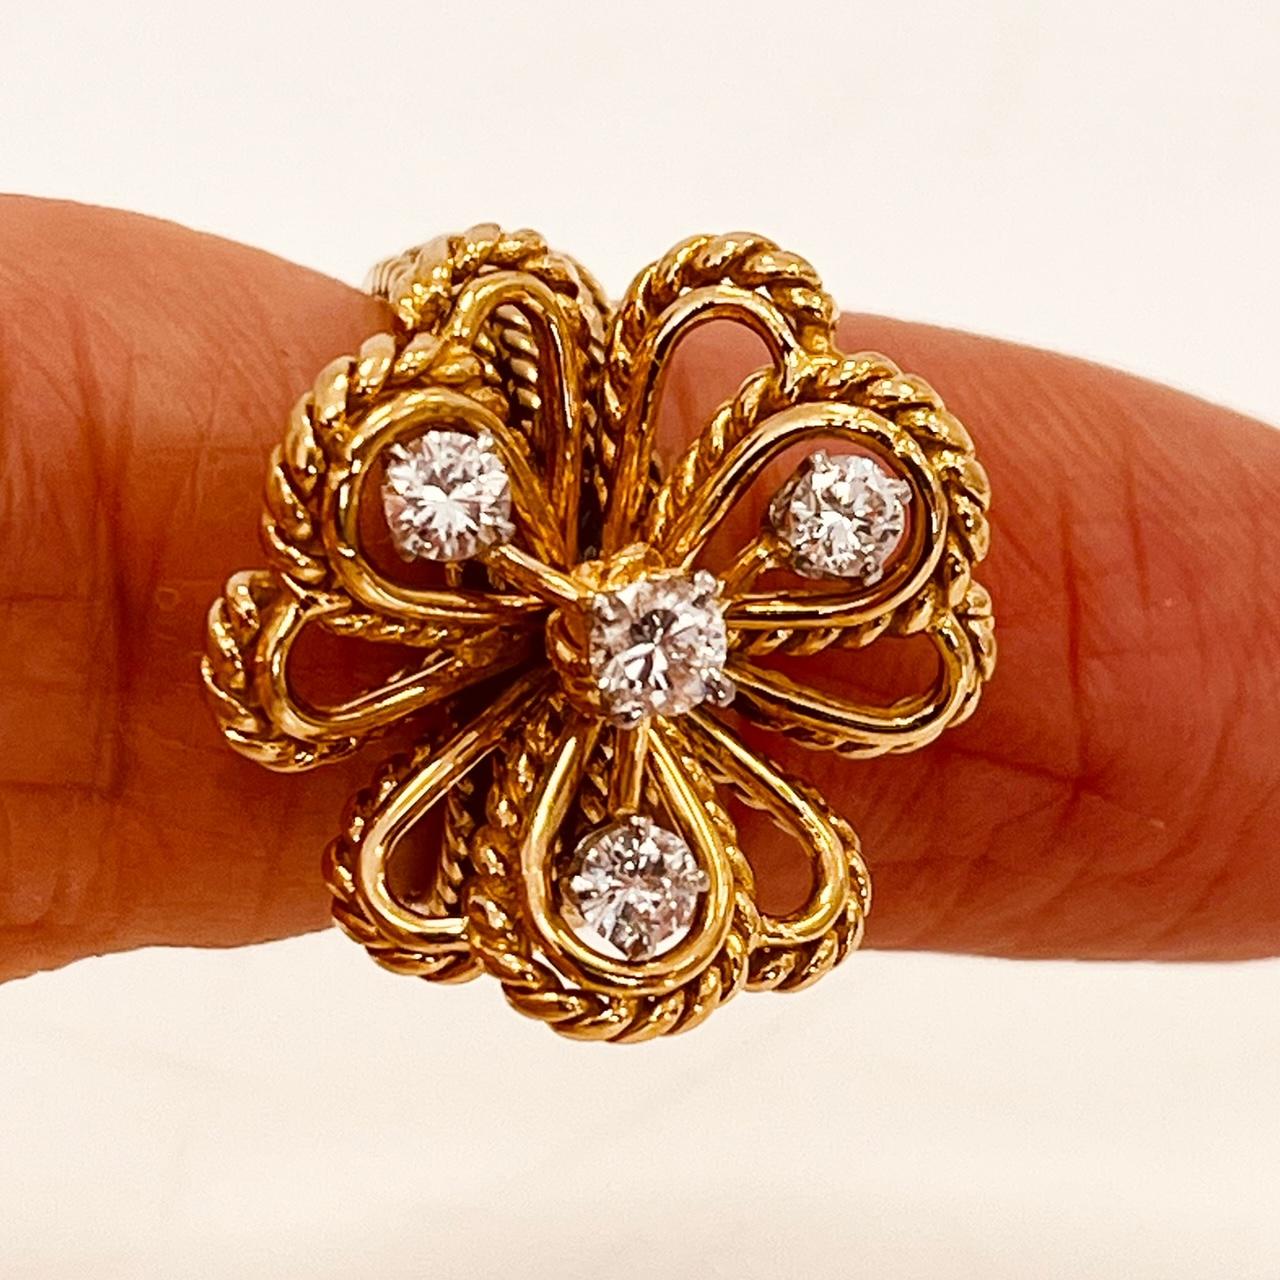 18ct Gold Vintage Flower Ring Suspending Four Brilliant Cut Diamonds Circa 1960s For Sale 1